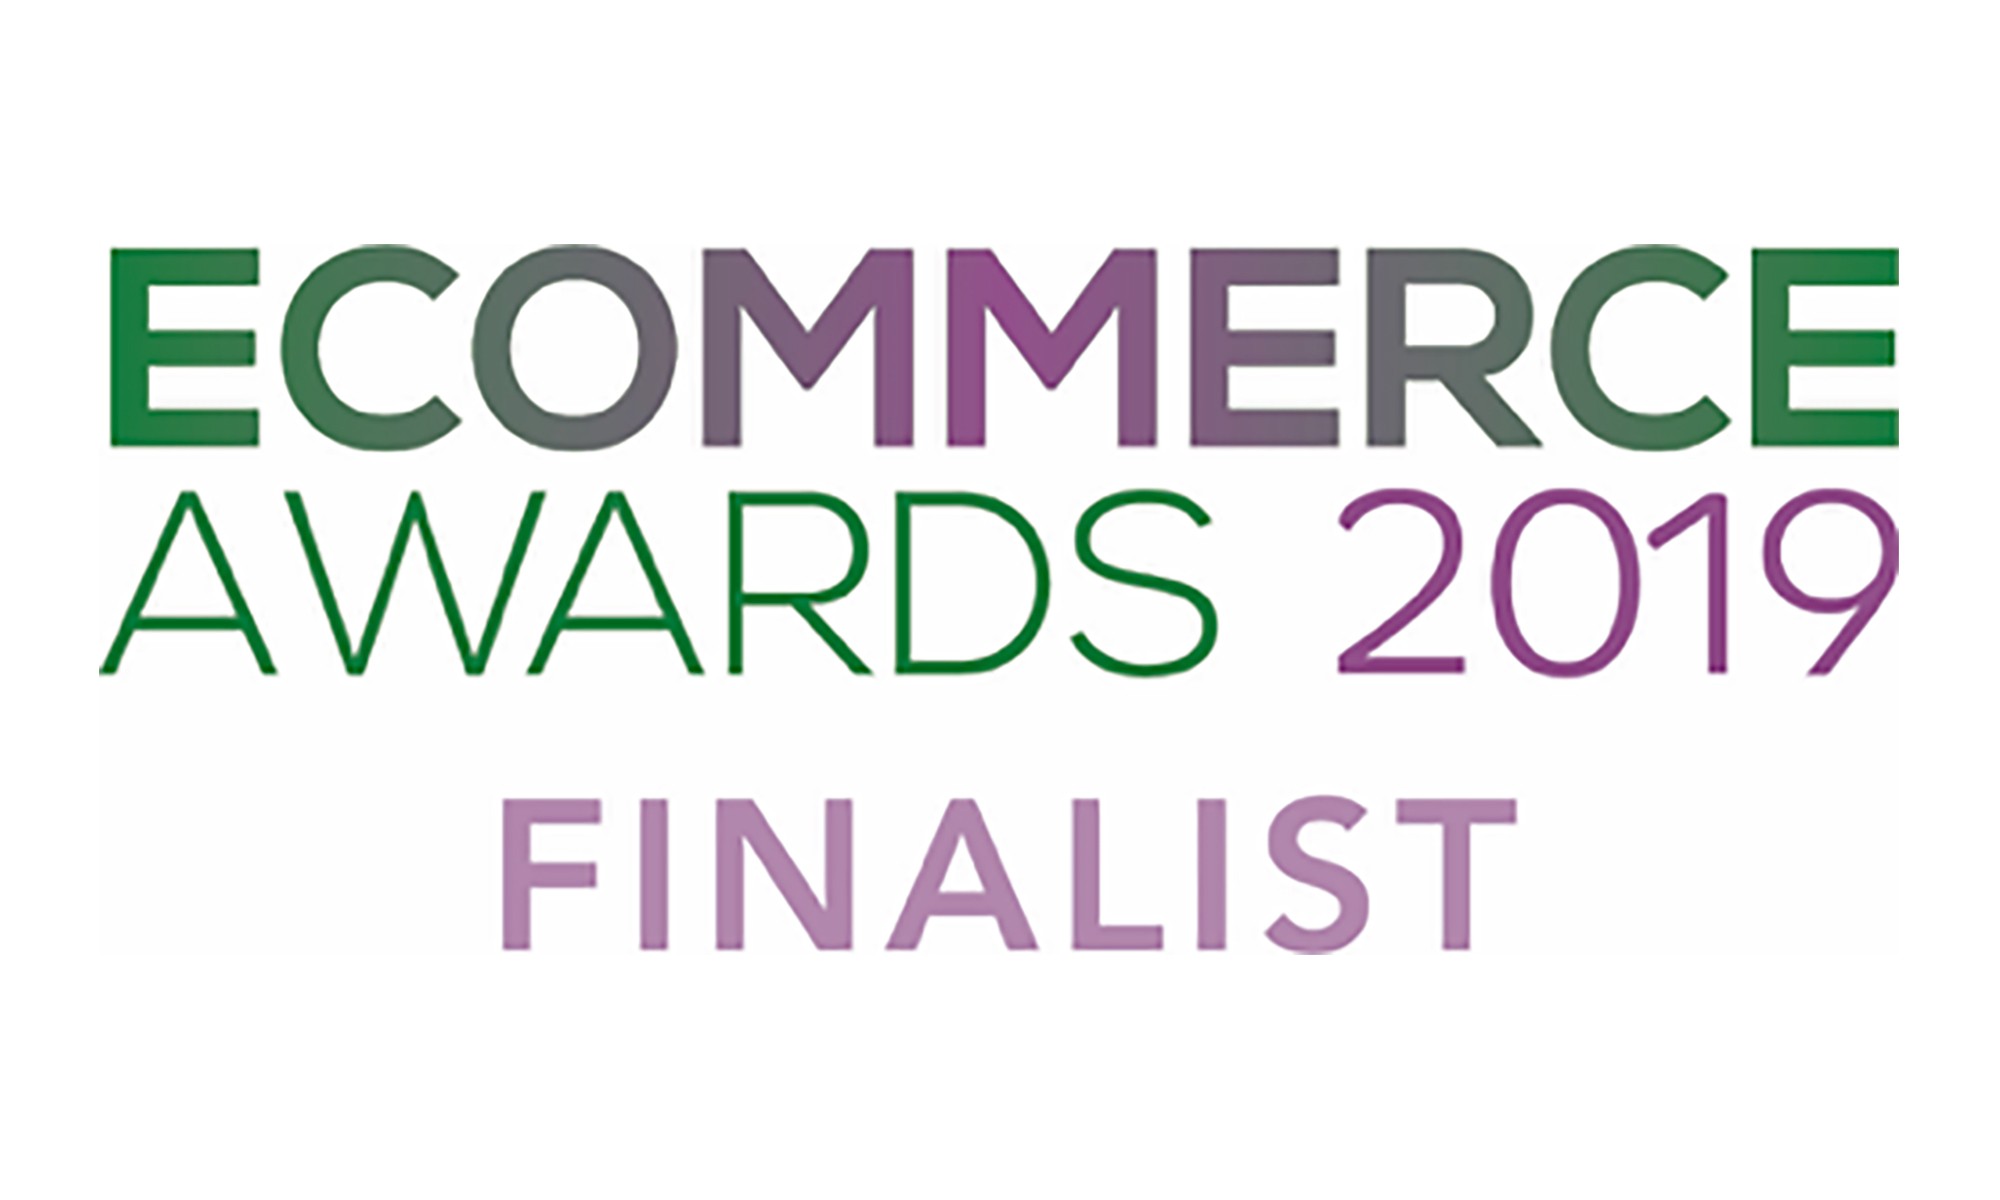 eCommerce Awards Finalist 2019